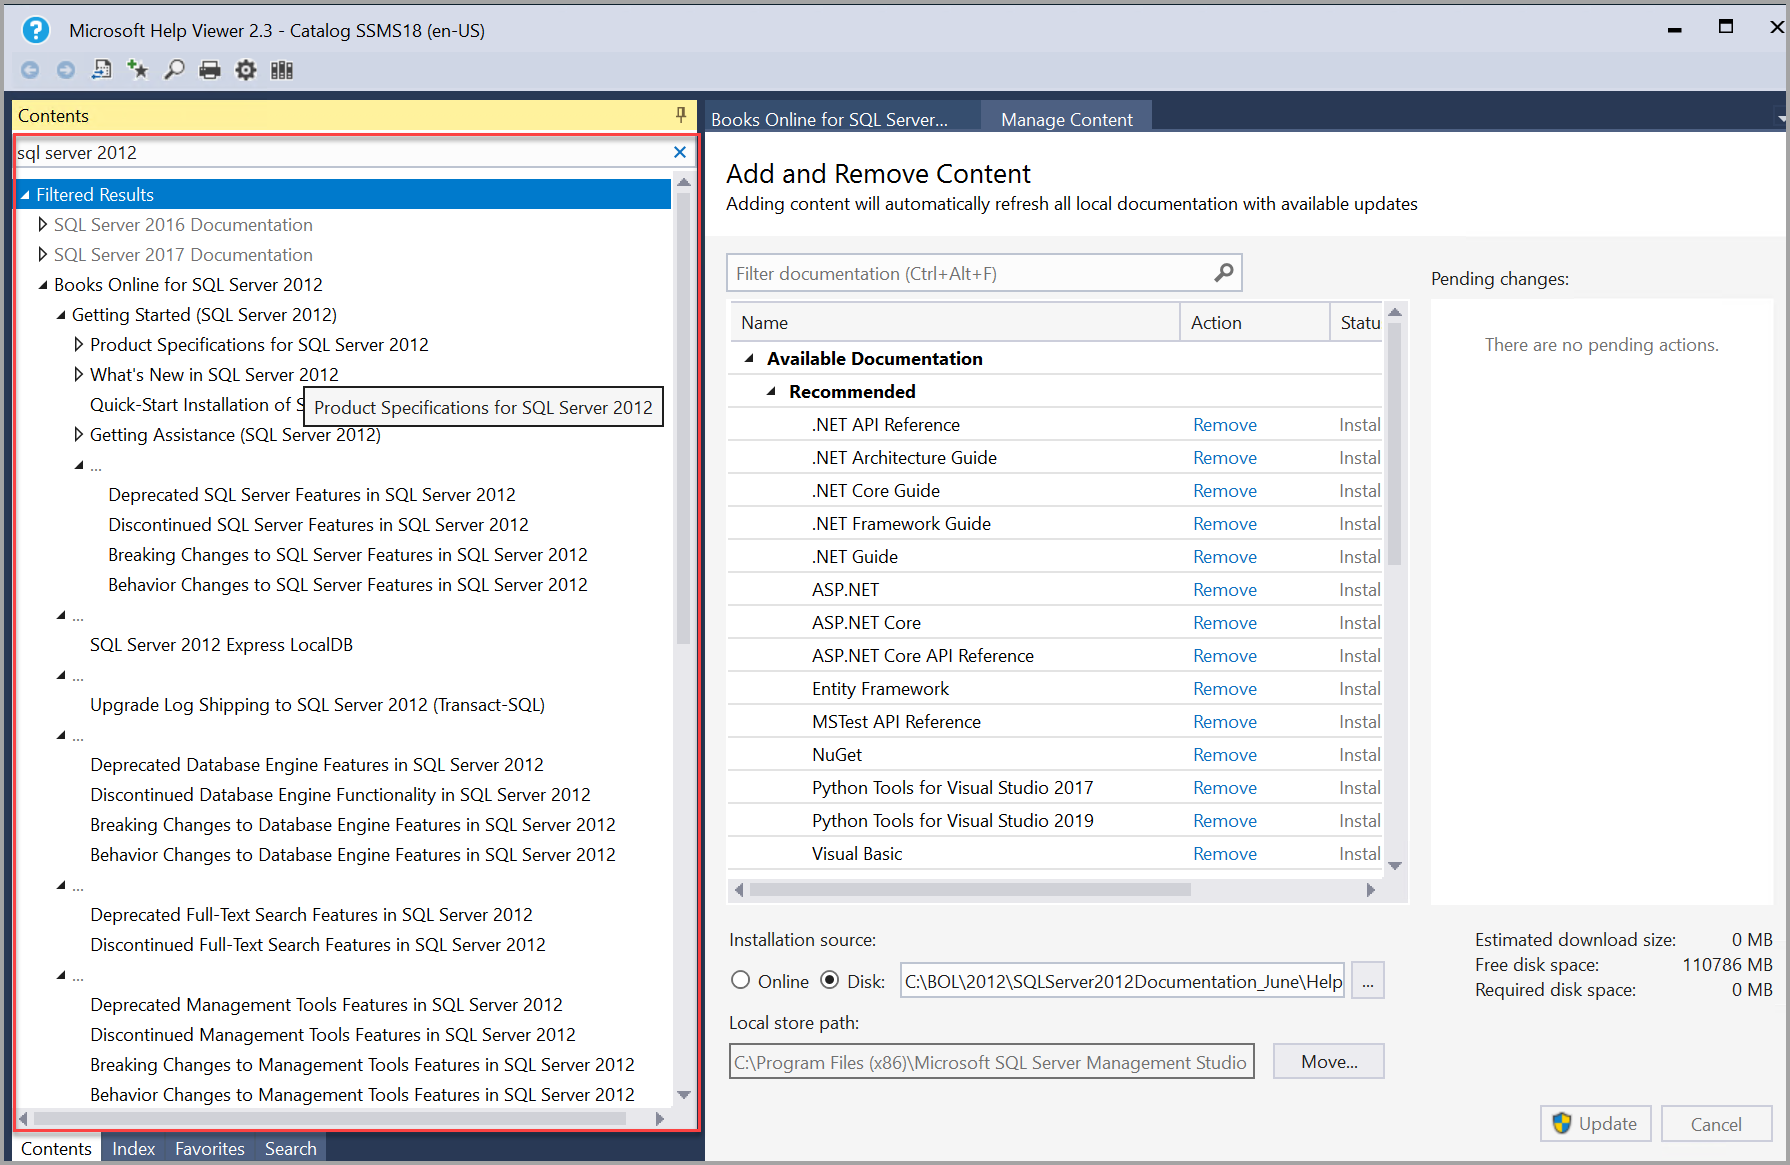 SQL Server 2012 documentation automatically updated